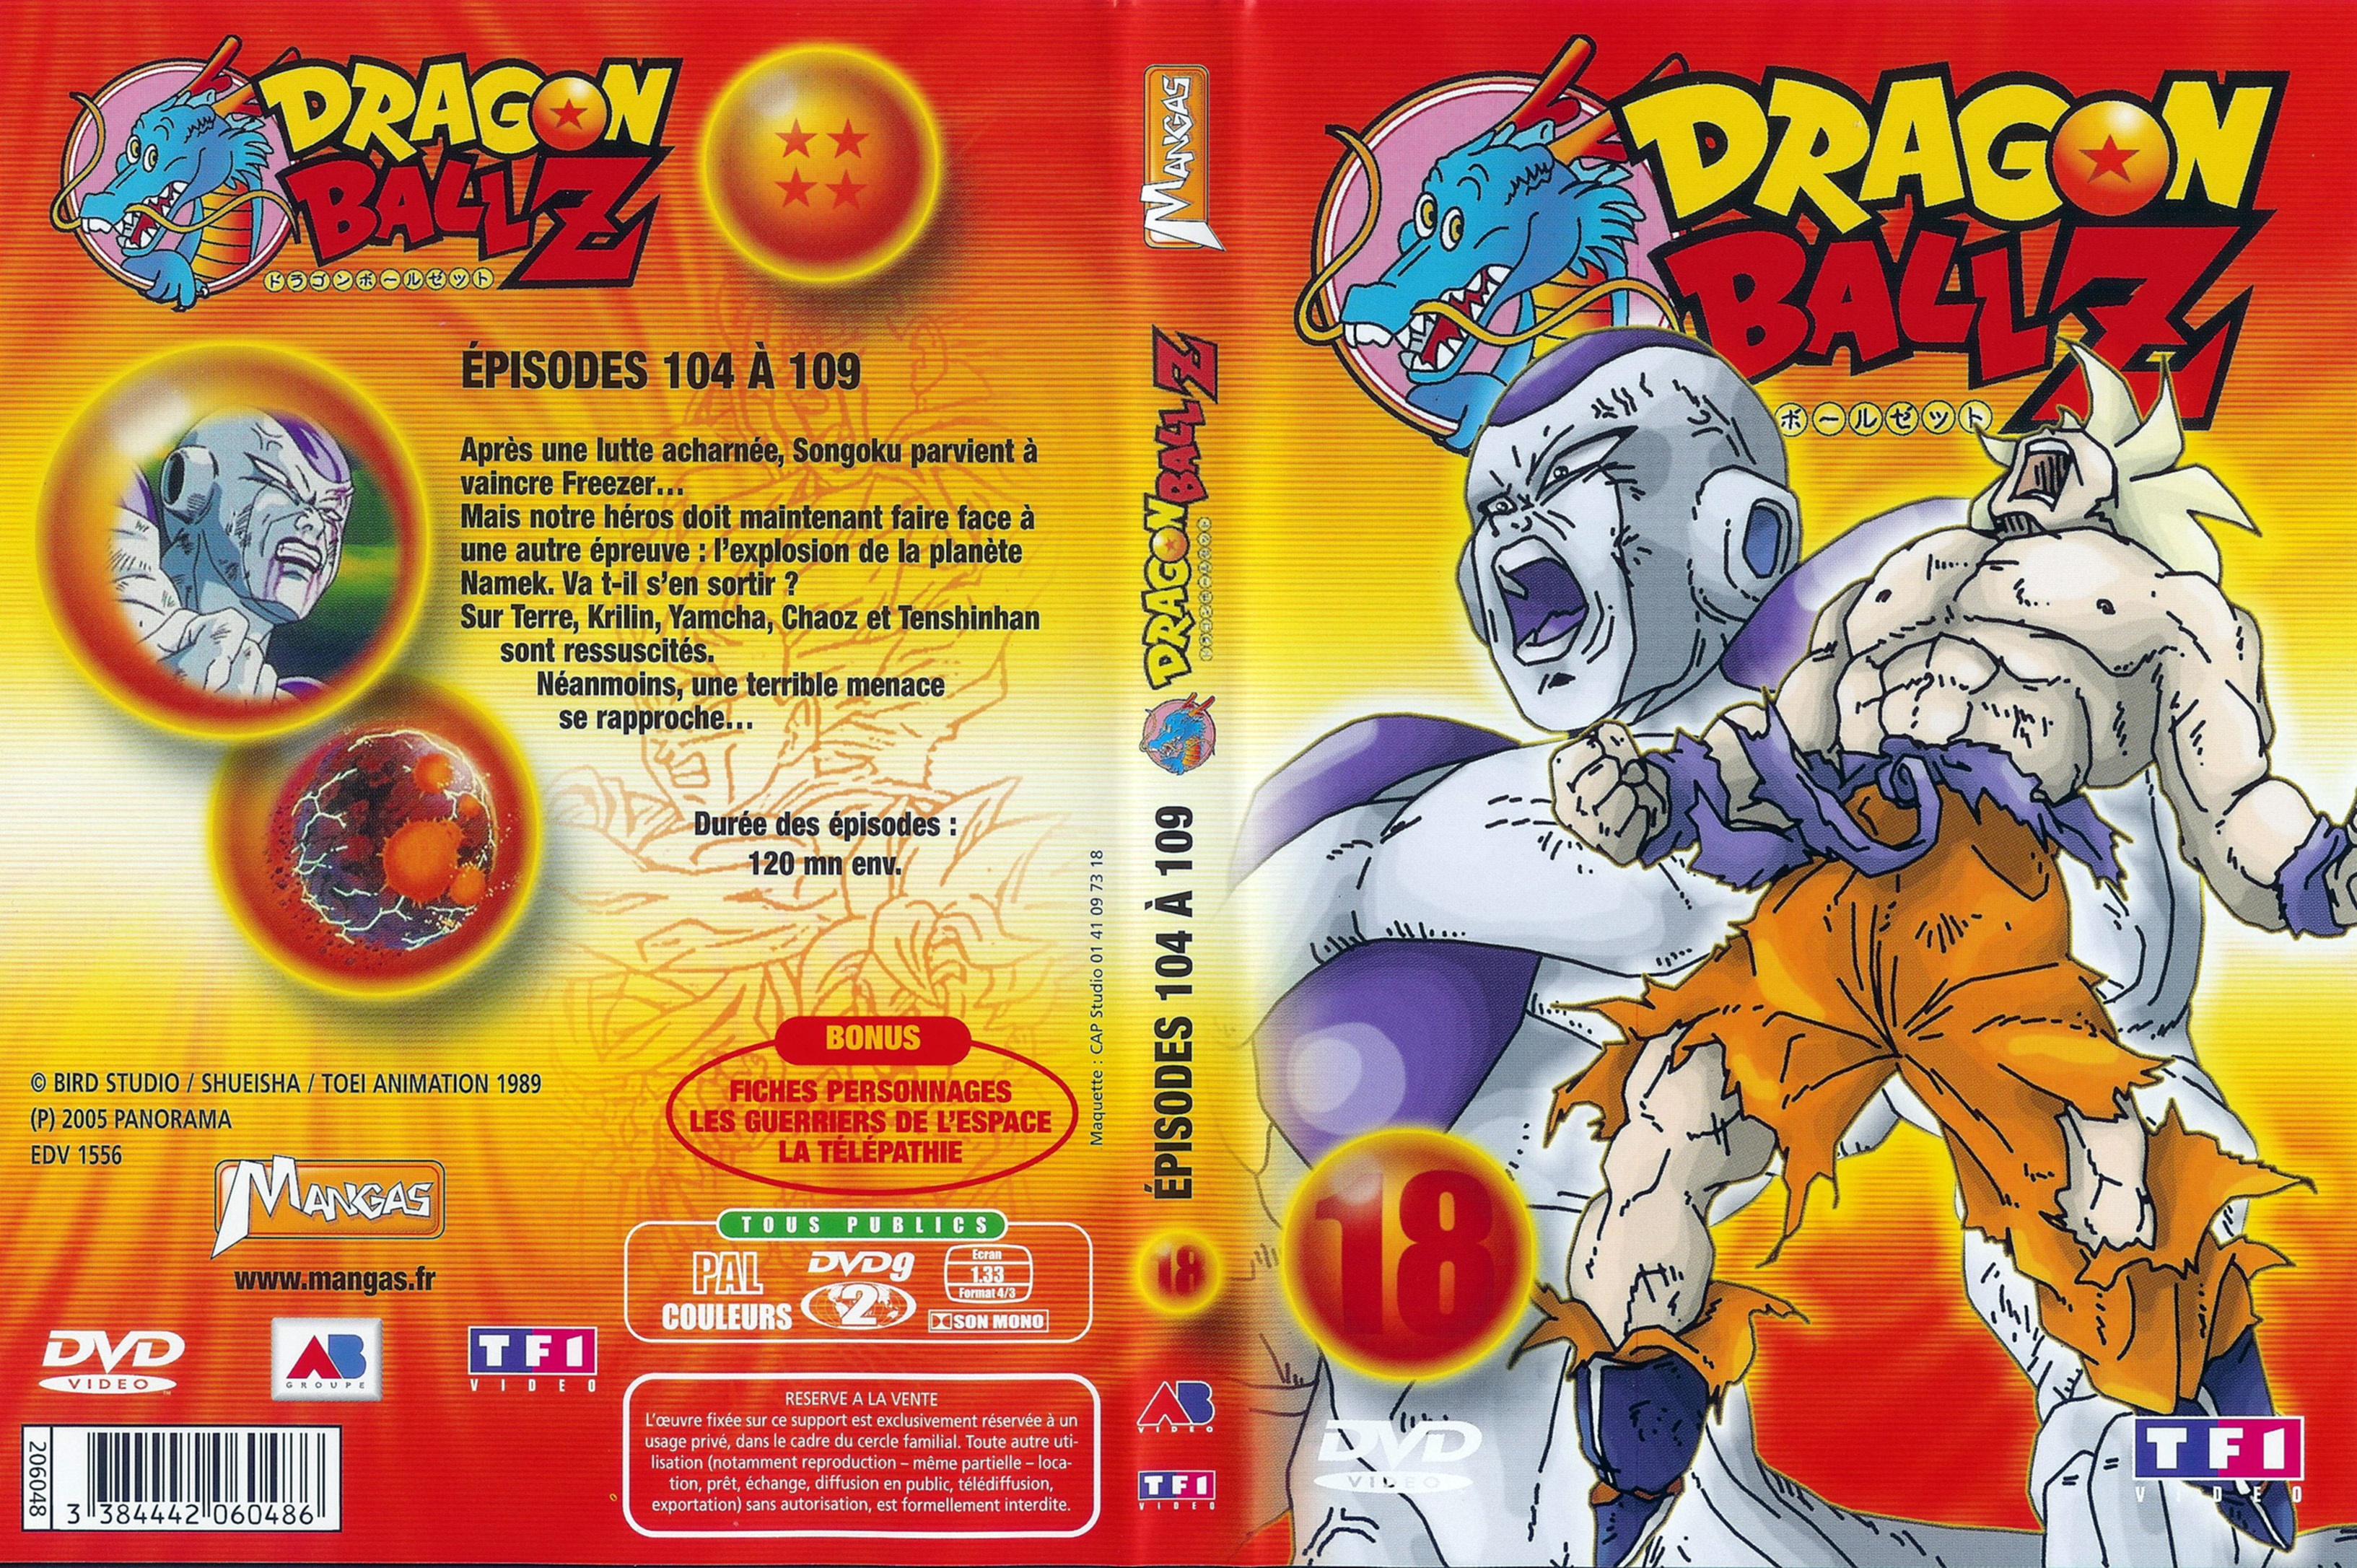 Jaquette DVD Dragon ball Z vol 18